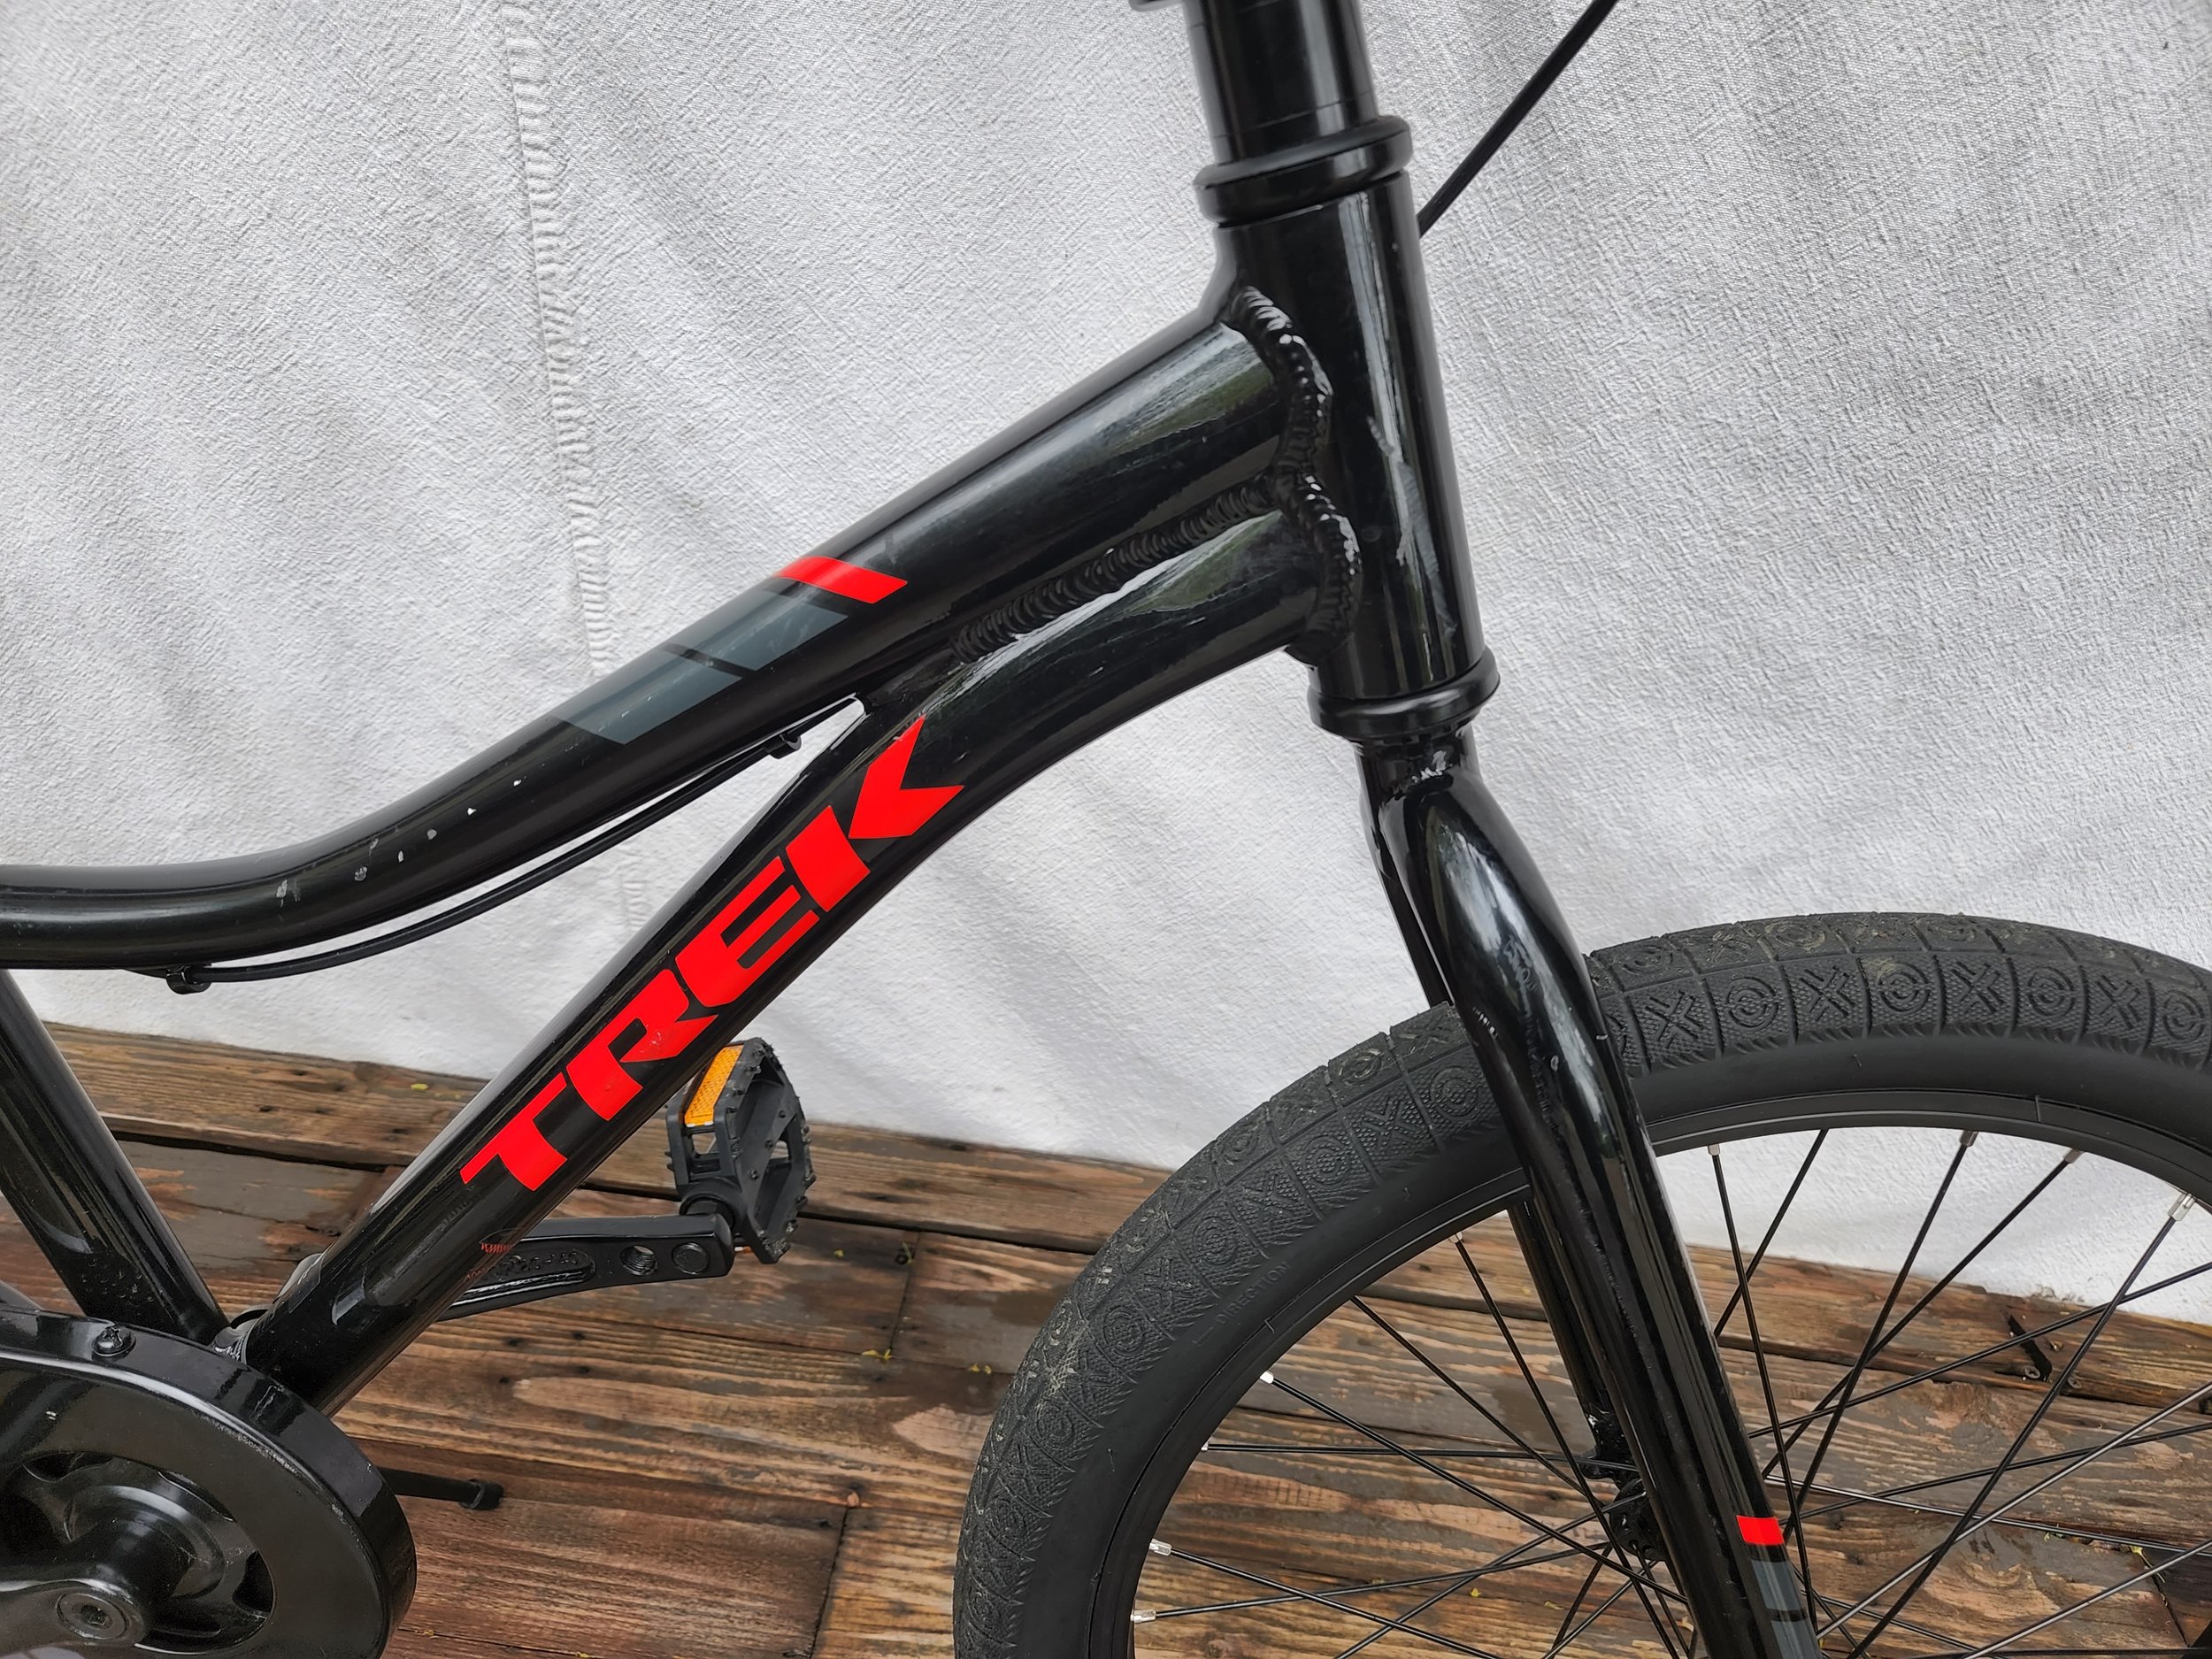 MidGard Pedali bici alluminio bici per MTB City Bike Trekking BMX Freeride ecc.